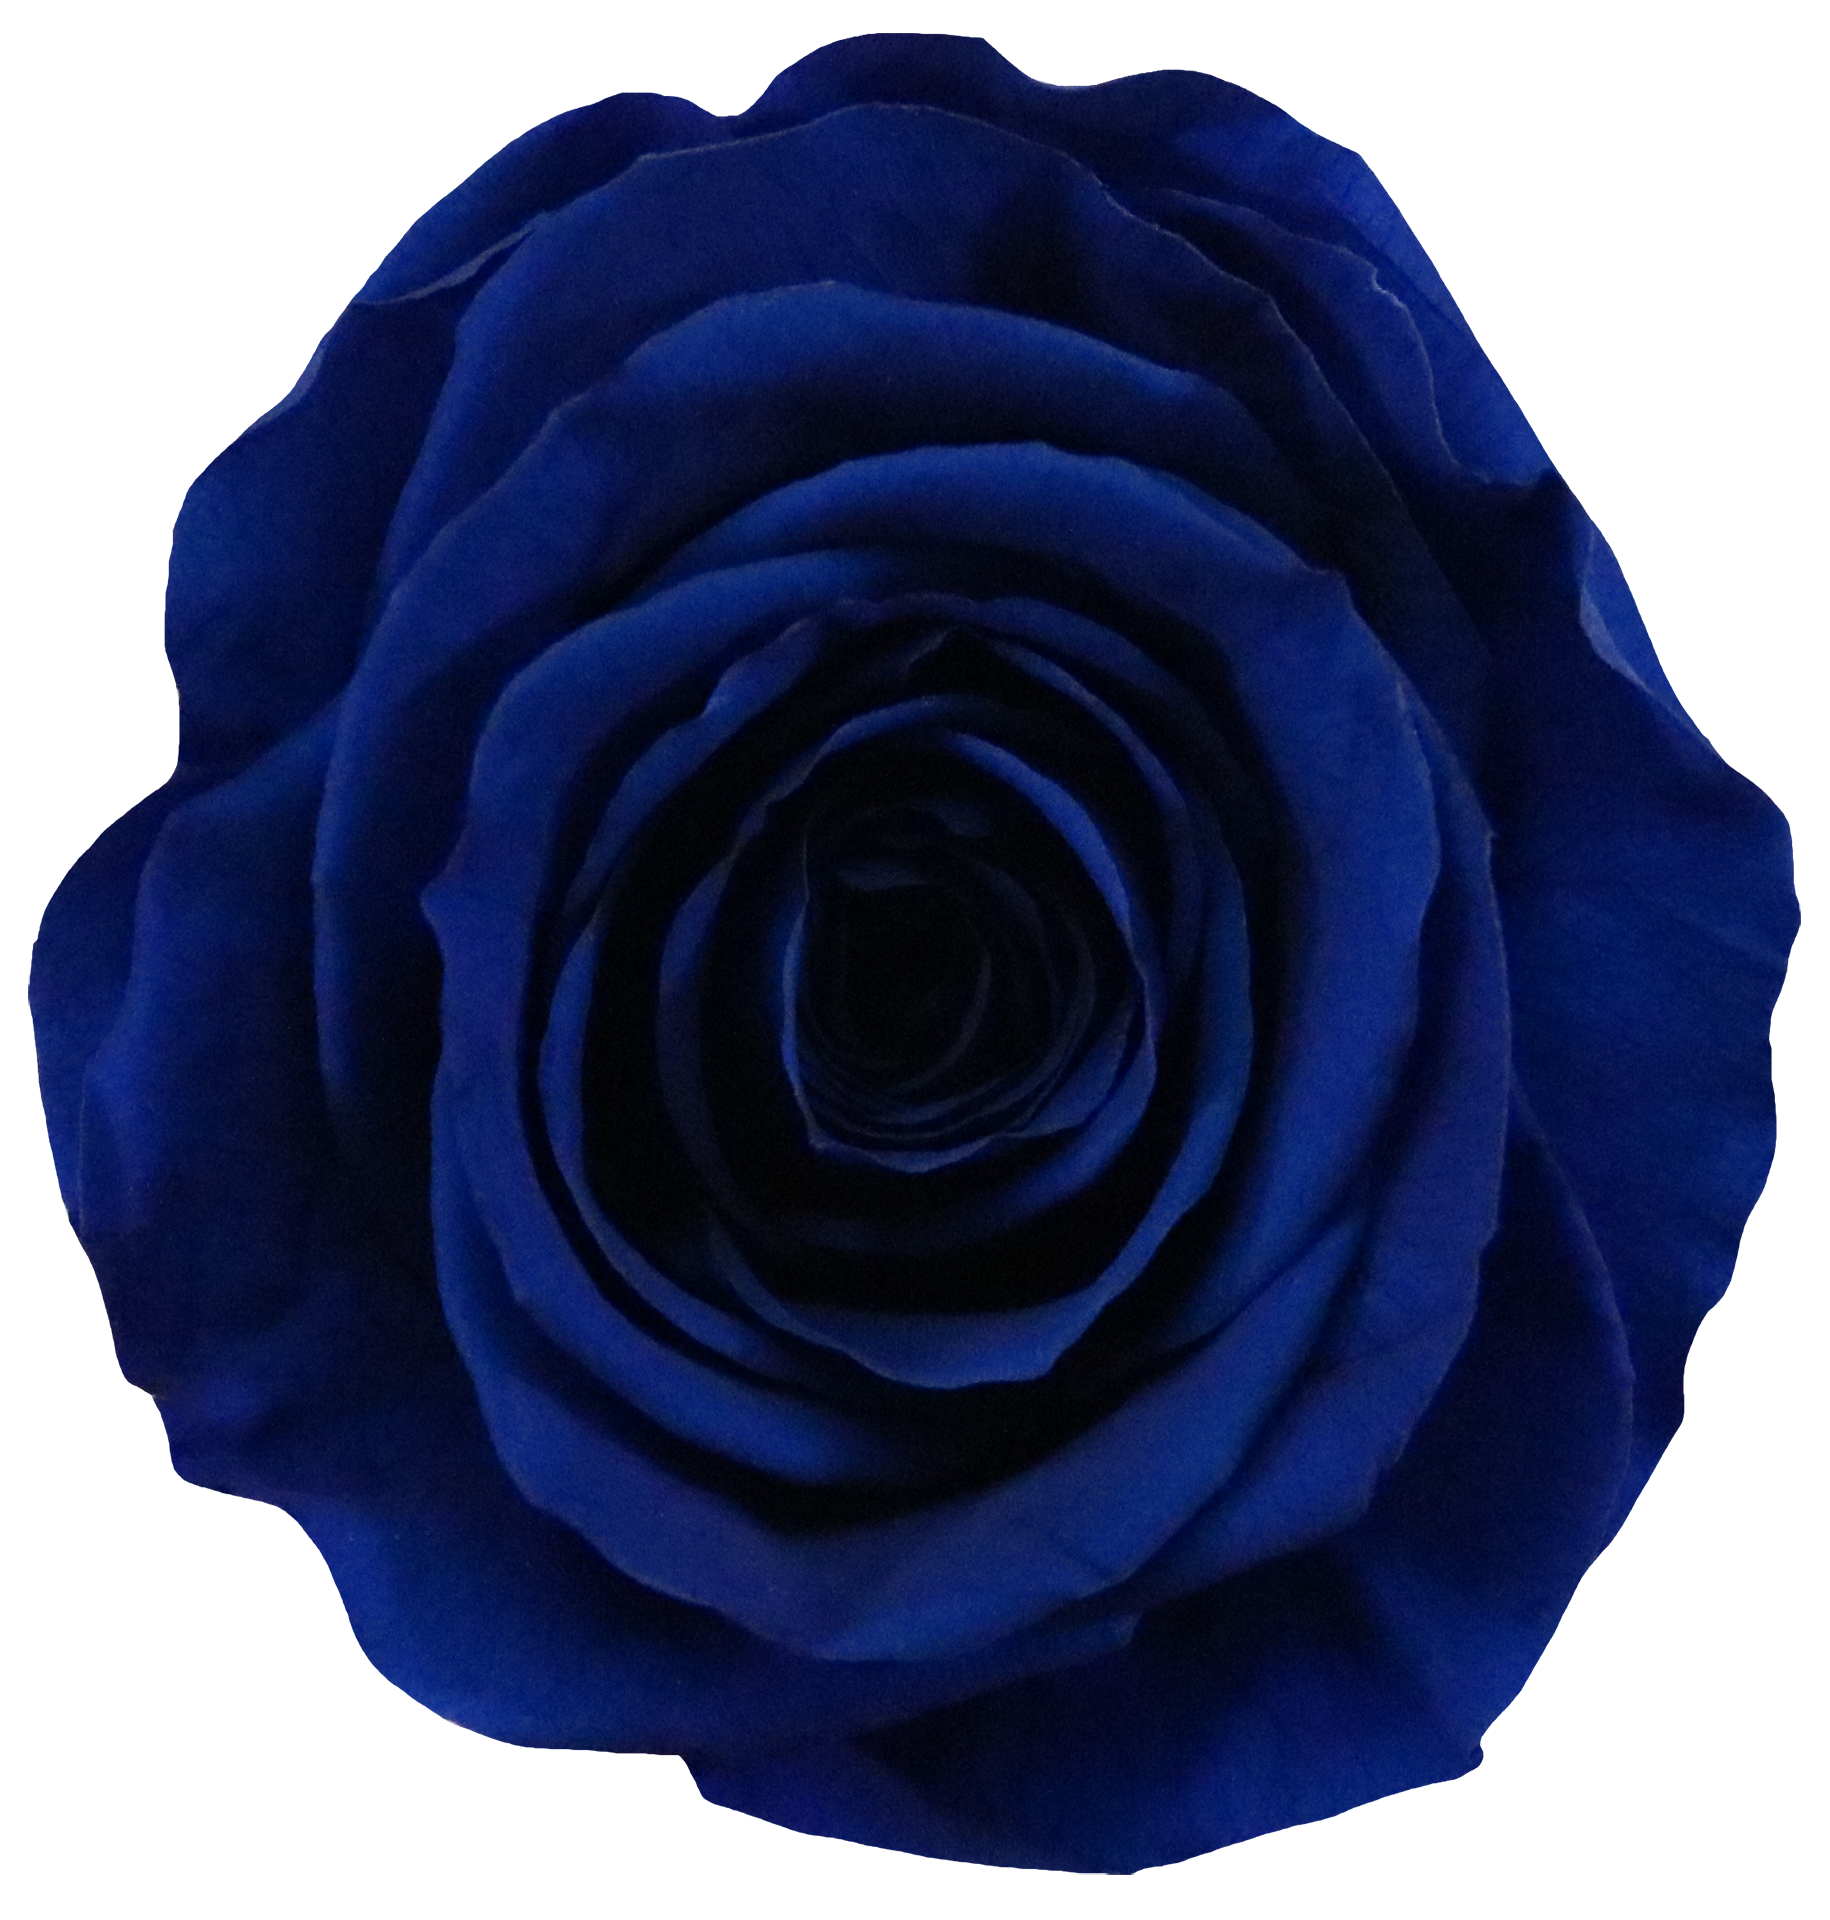 Roses - Magnifique Rose